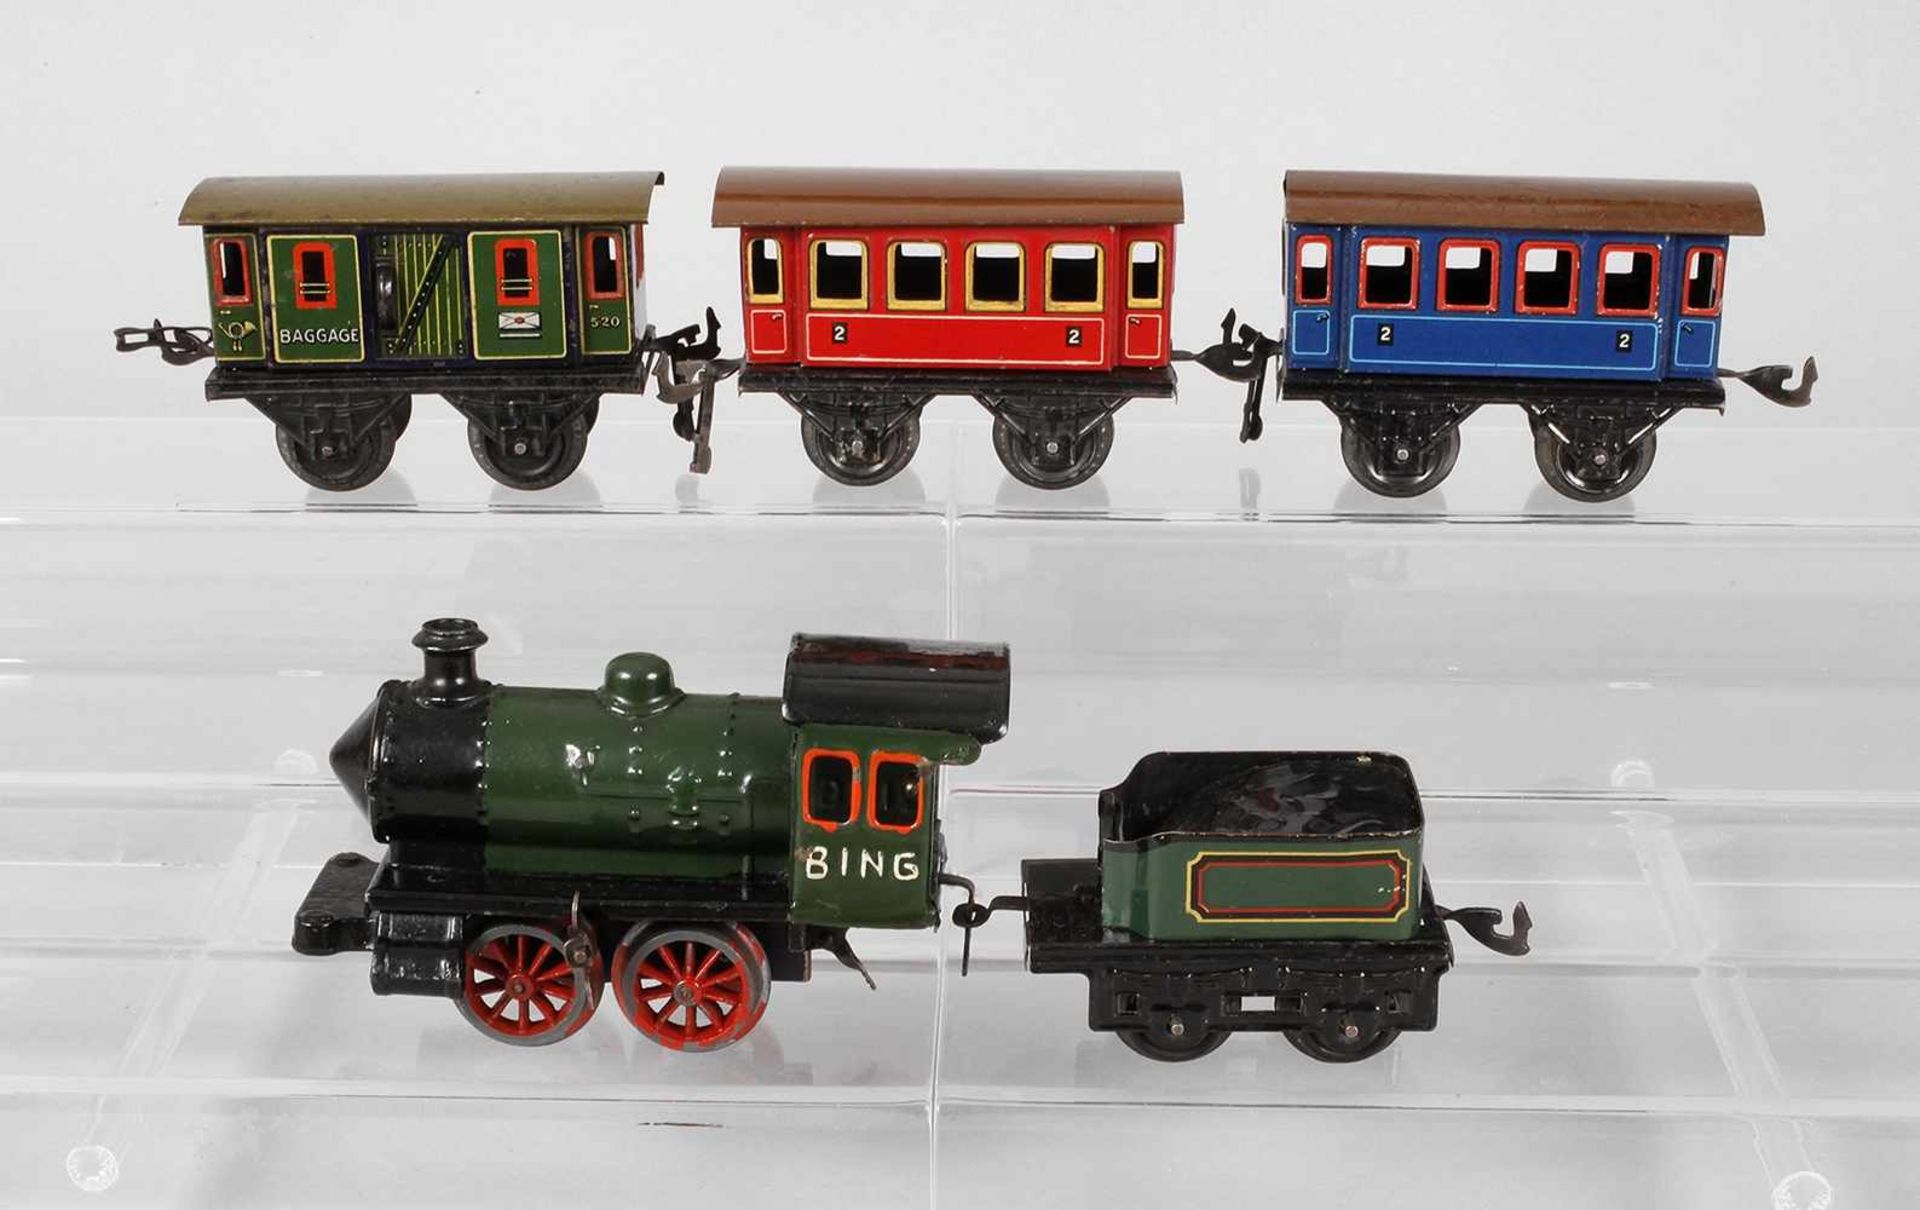 Bing Eisenbahn1920er Jahre, unterschiedlich gemarkt, Blech lackiert bzw. lithografiert, Spur 0,